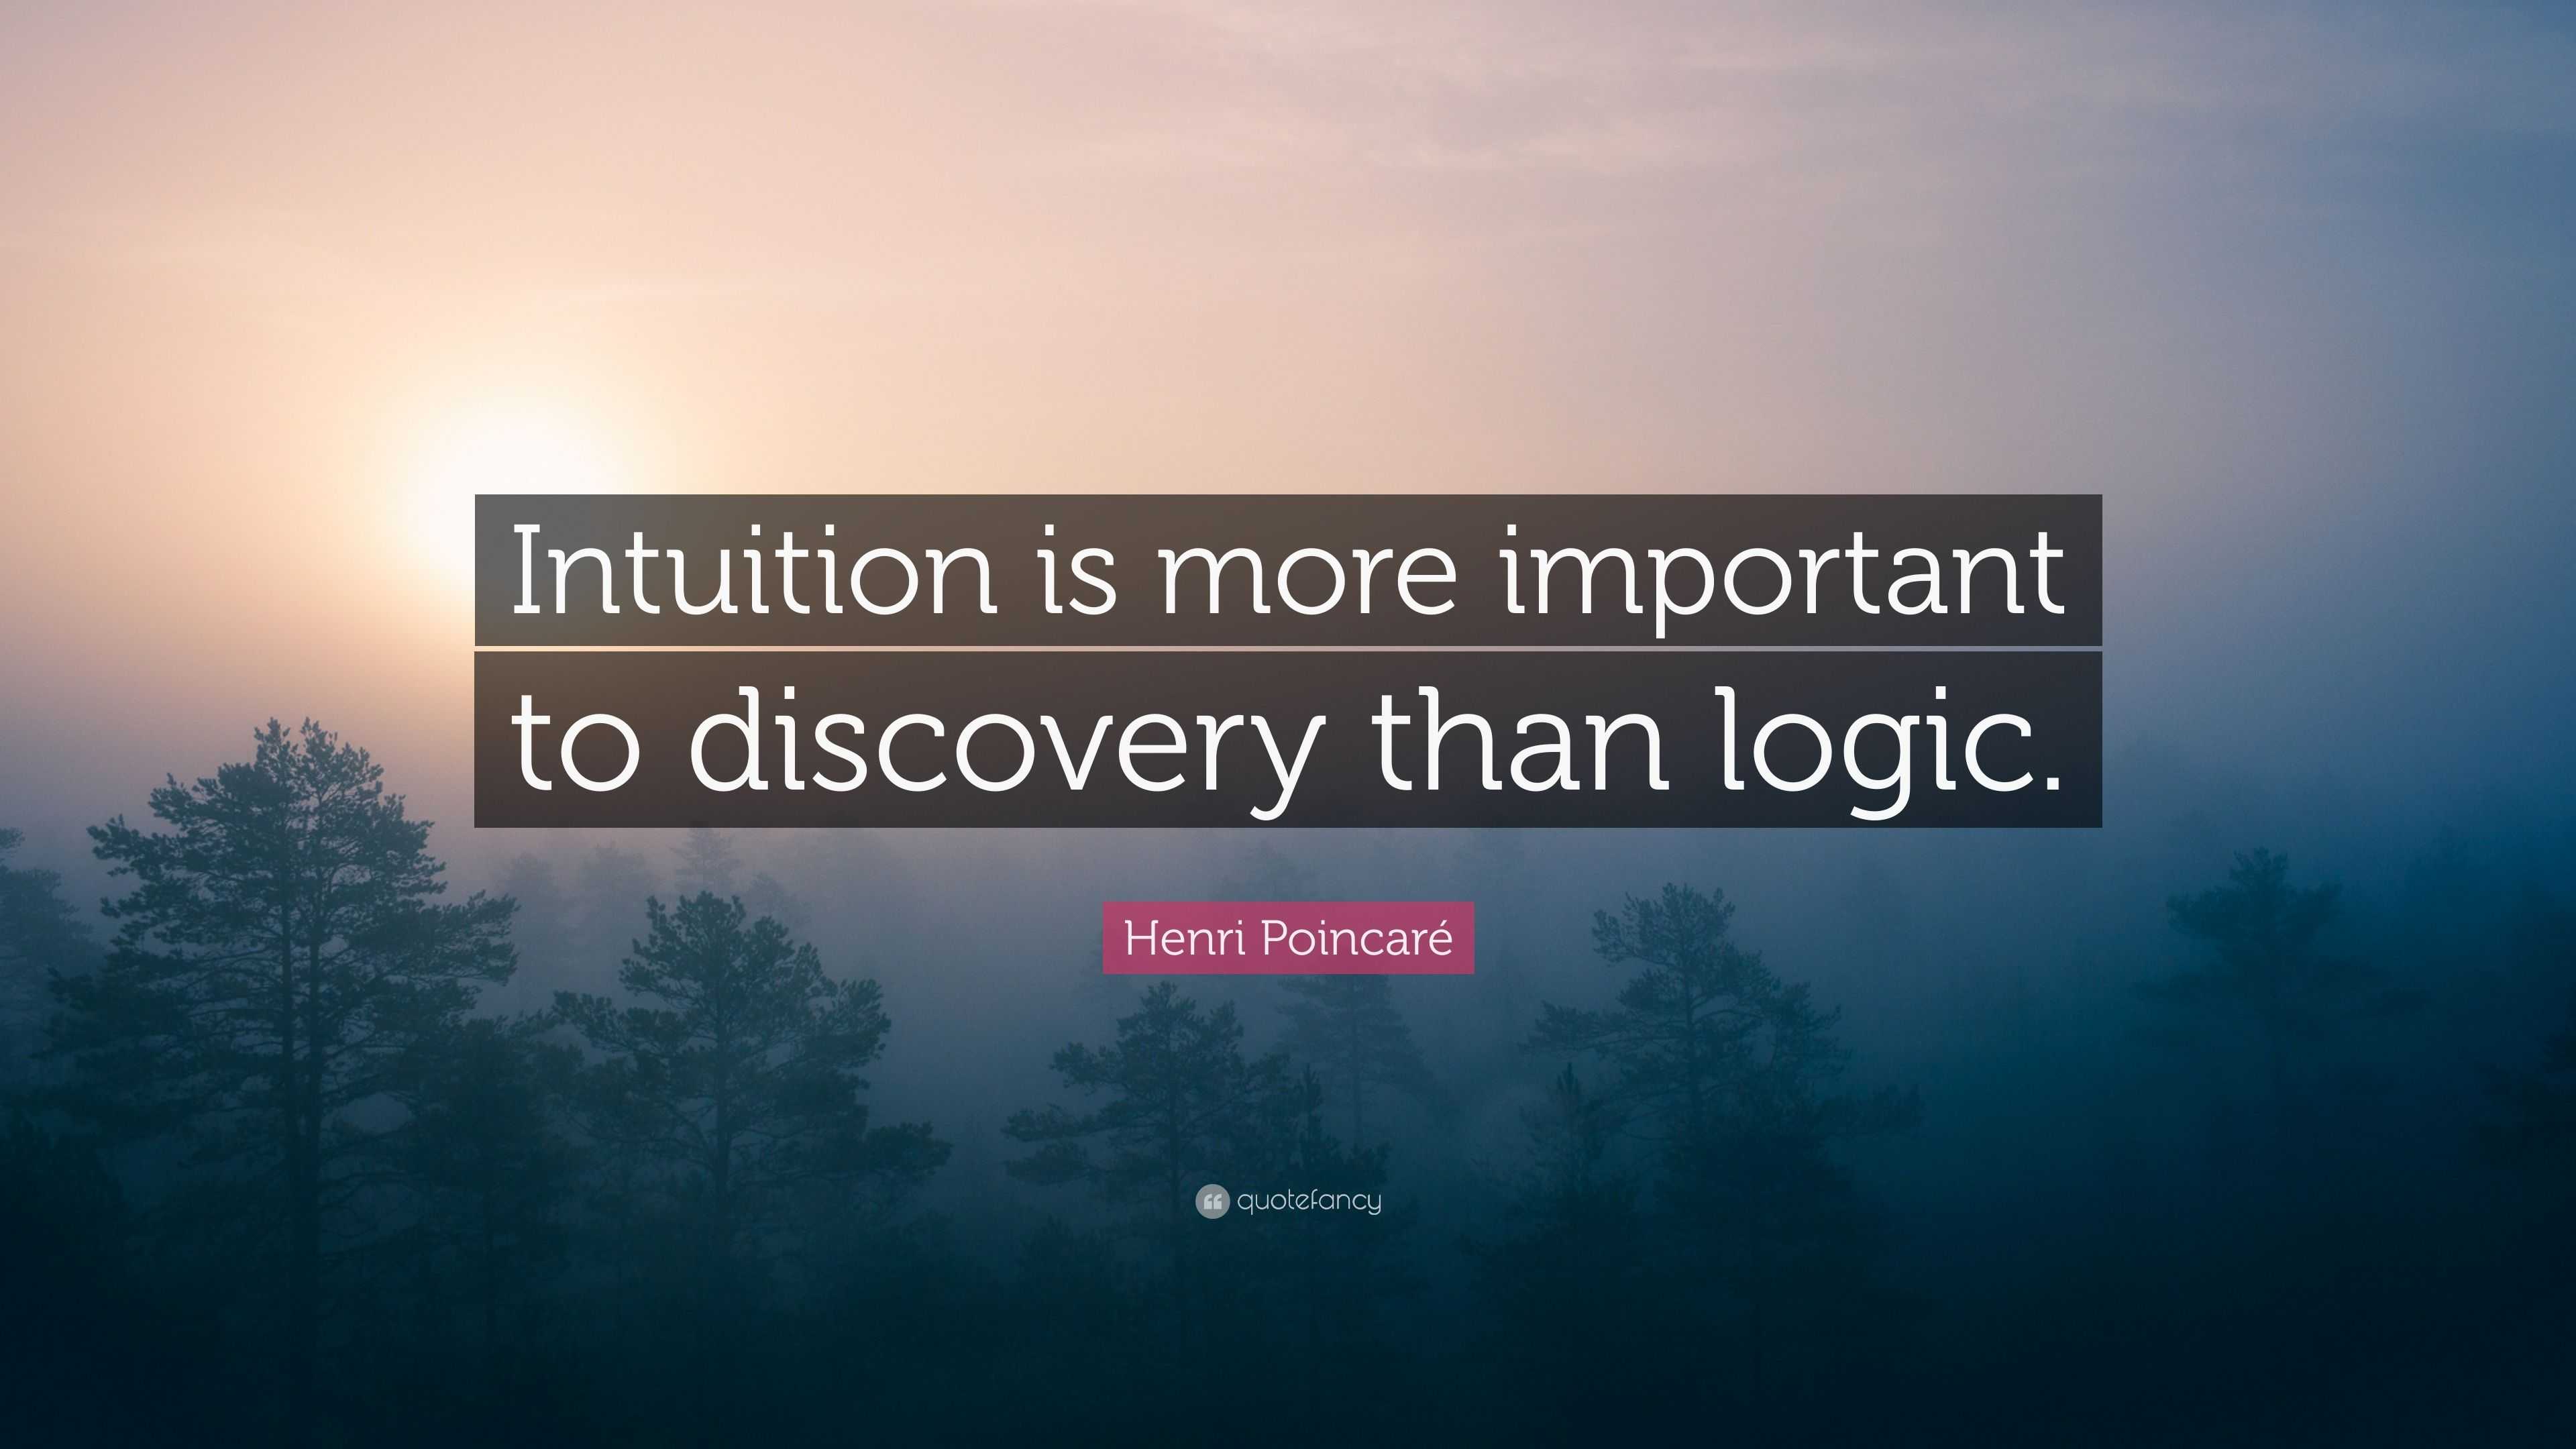 Henri Poincaré Quote “Intuition is more important to